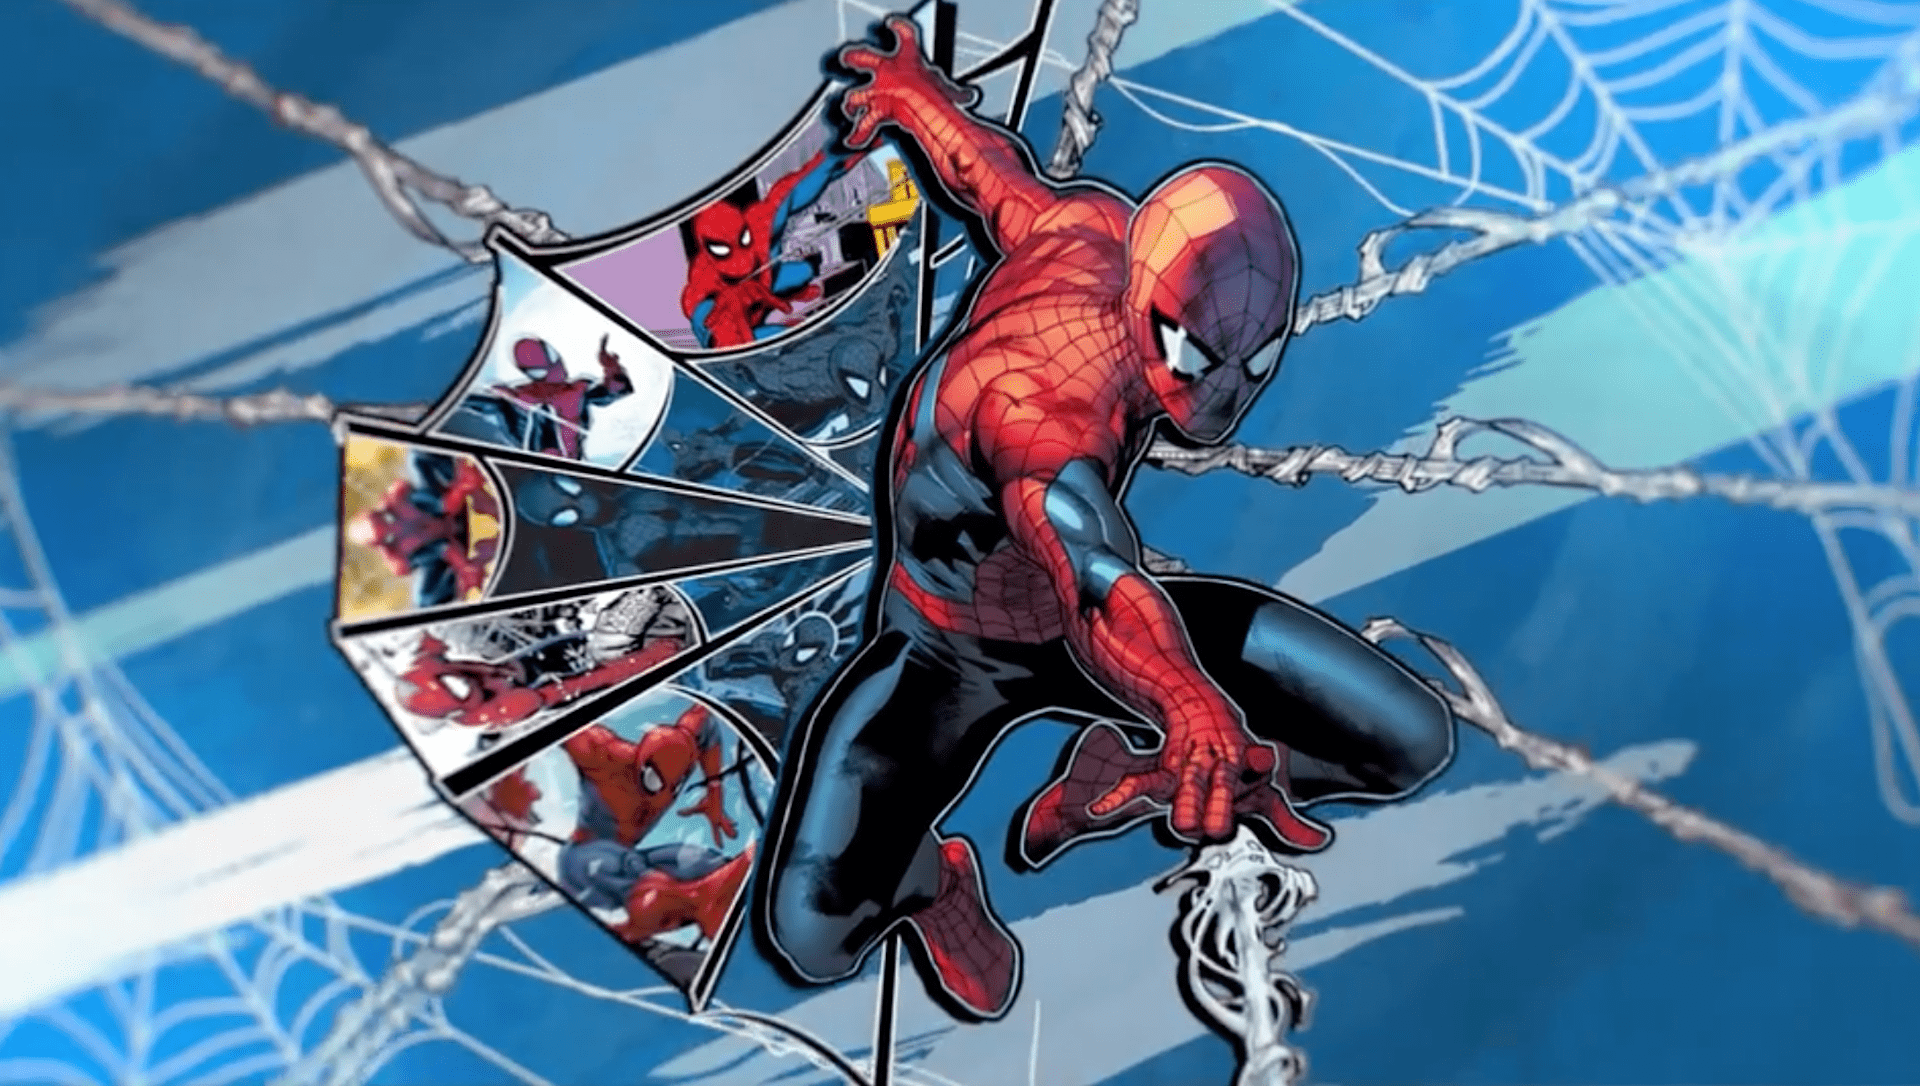 Marvel reveals year-long Spider-Man celebration kicking off in 2022